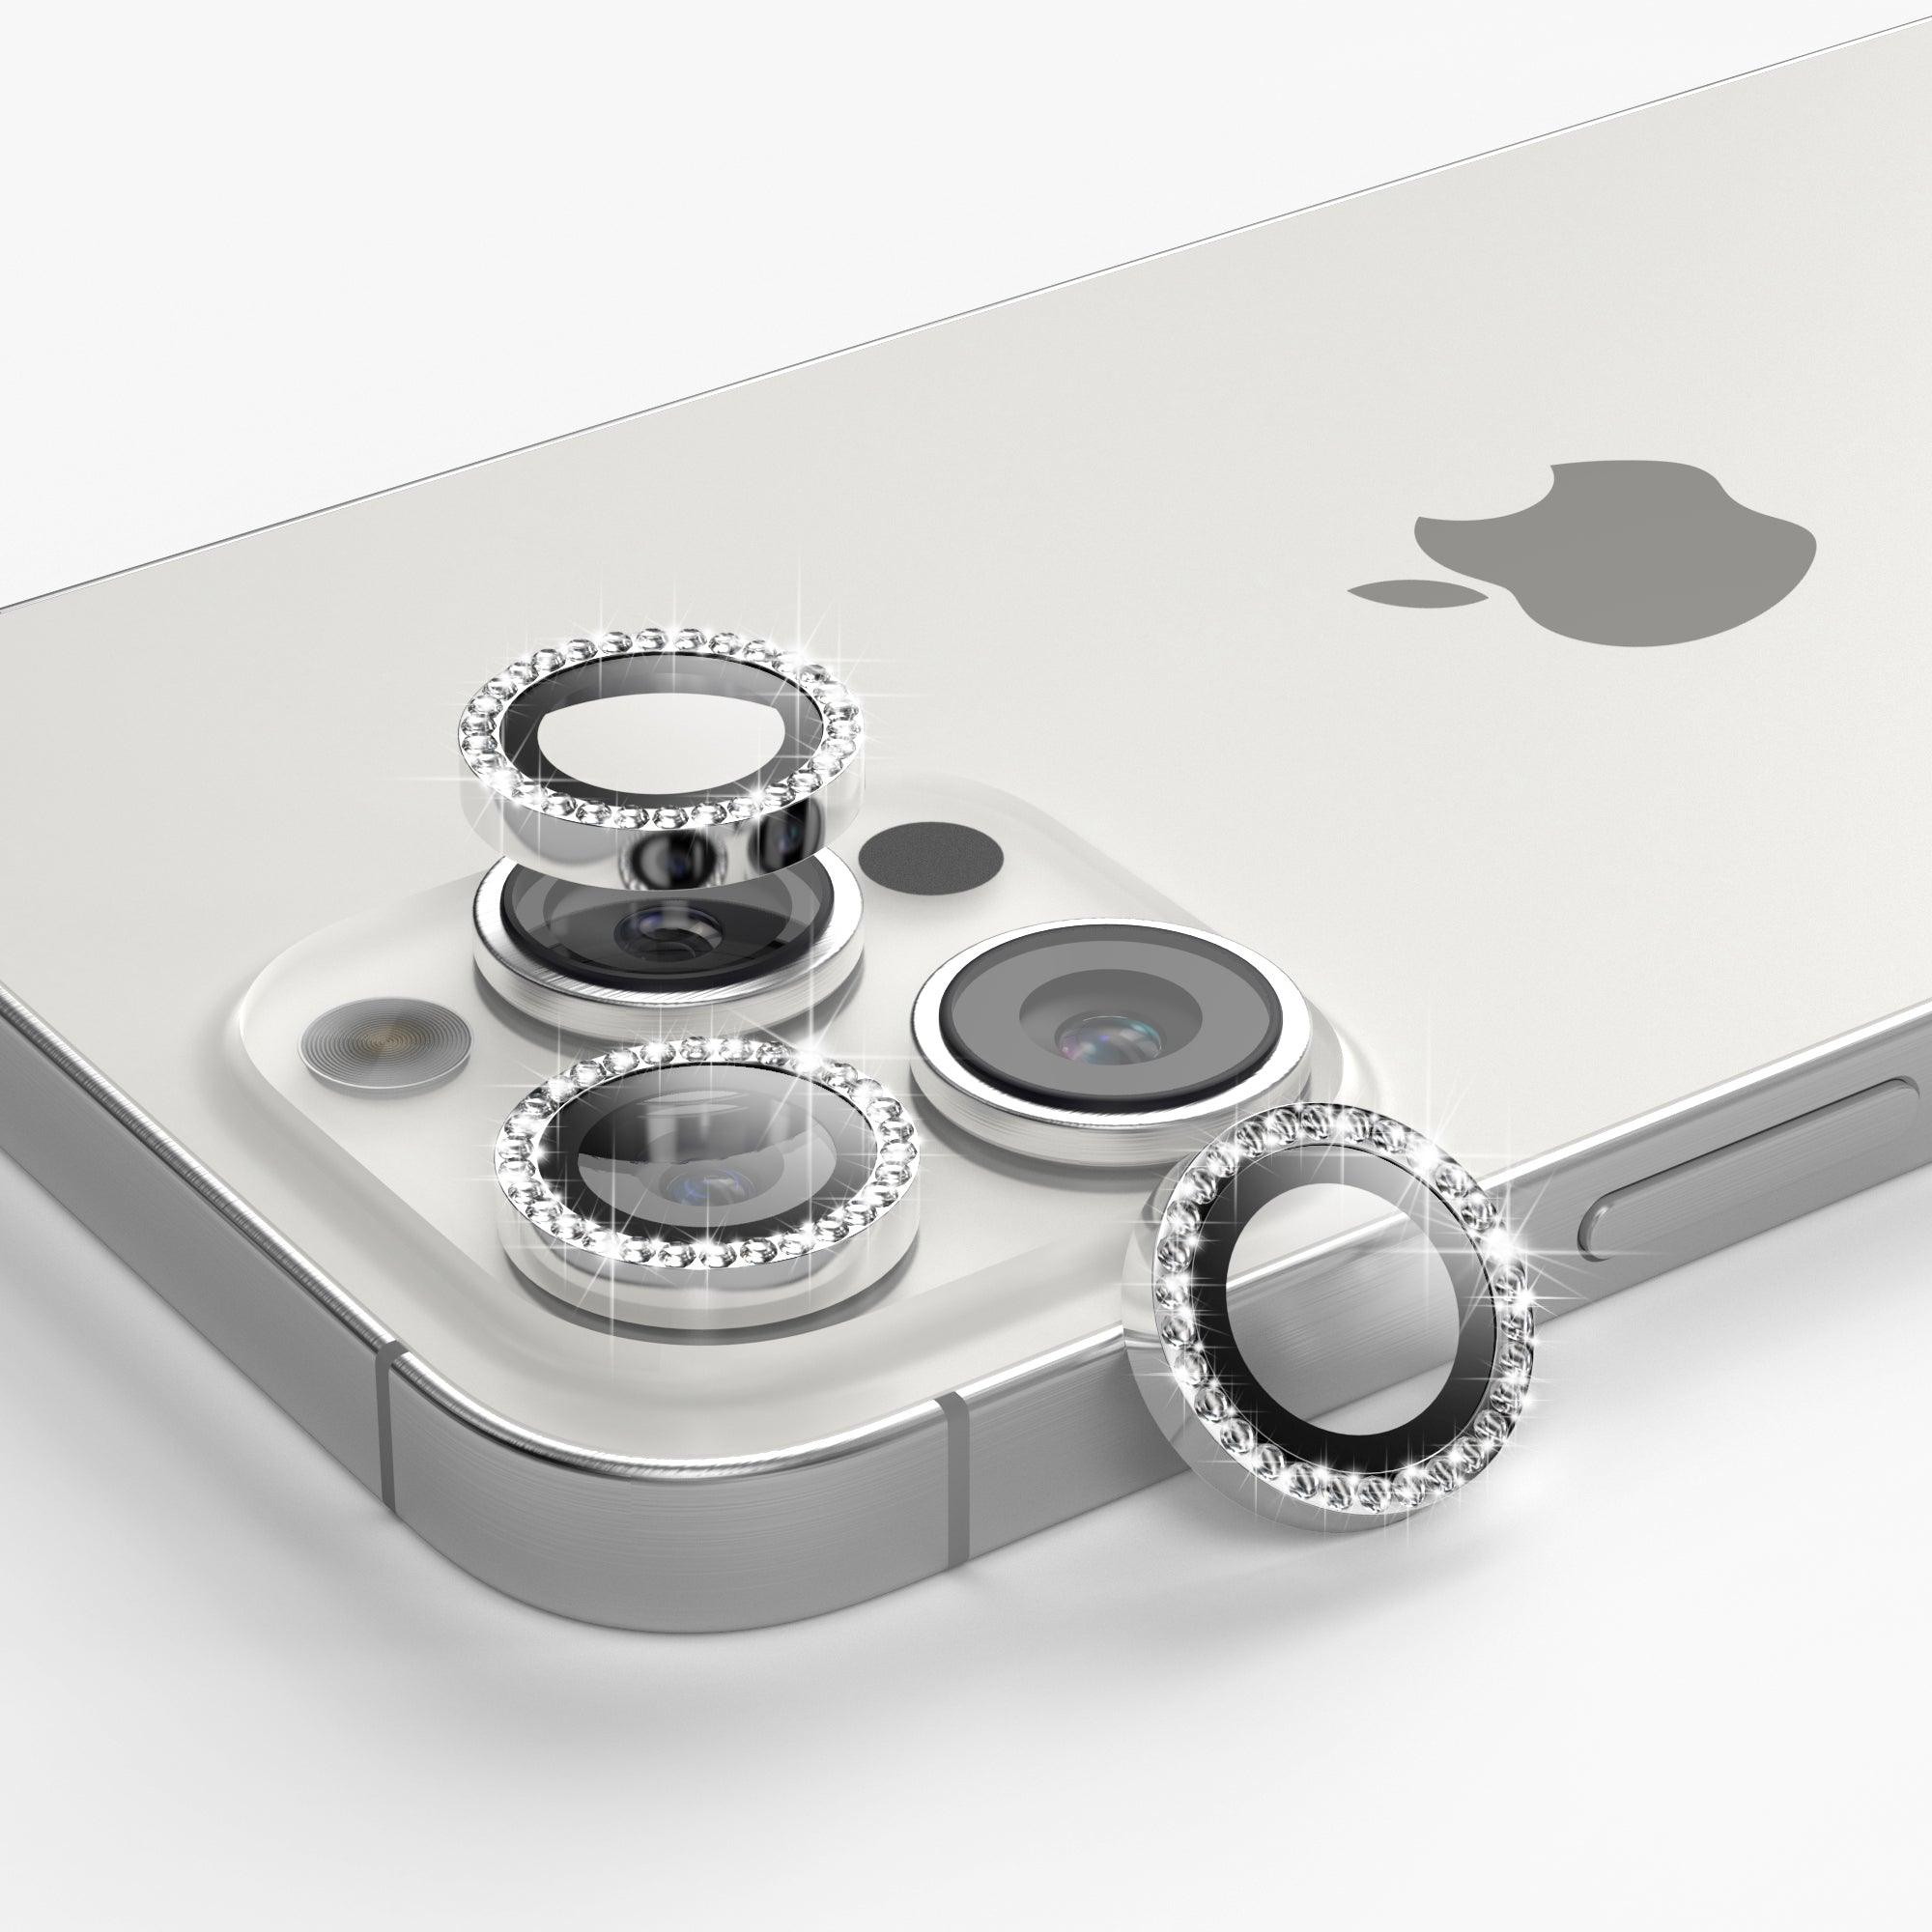 iPhone 14 Pro Max キラキラカメラレンズ保護カバー - 株式会社CORECOLOUR